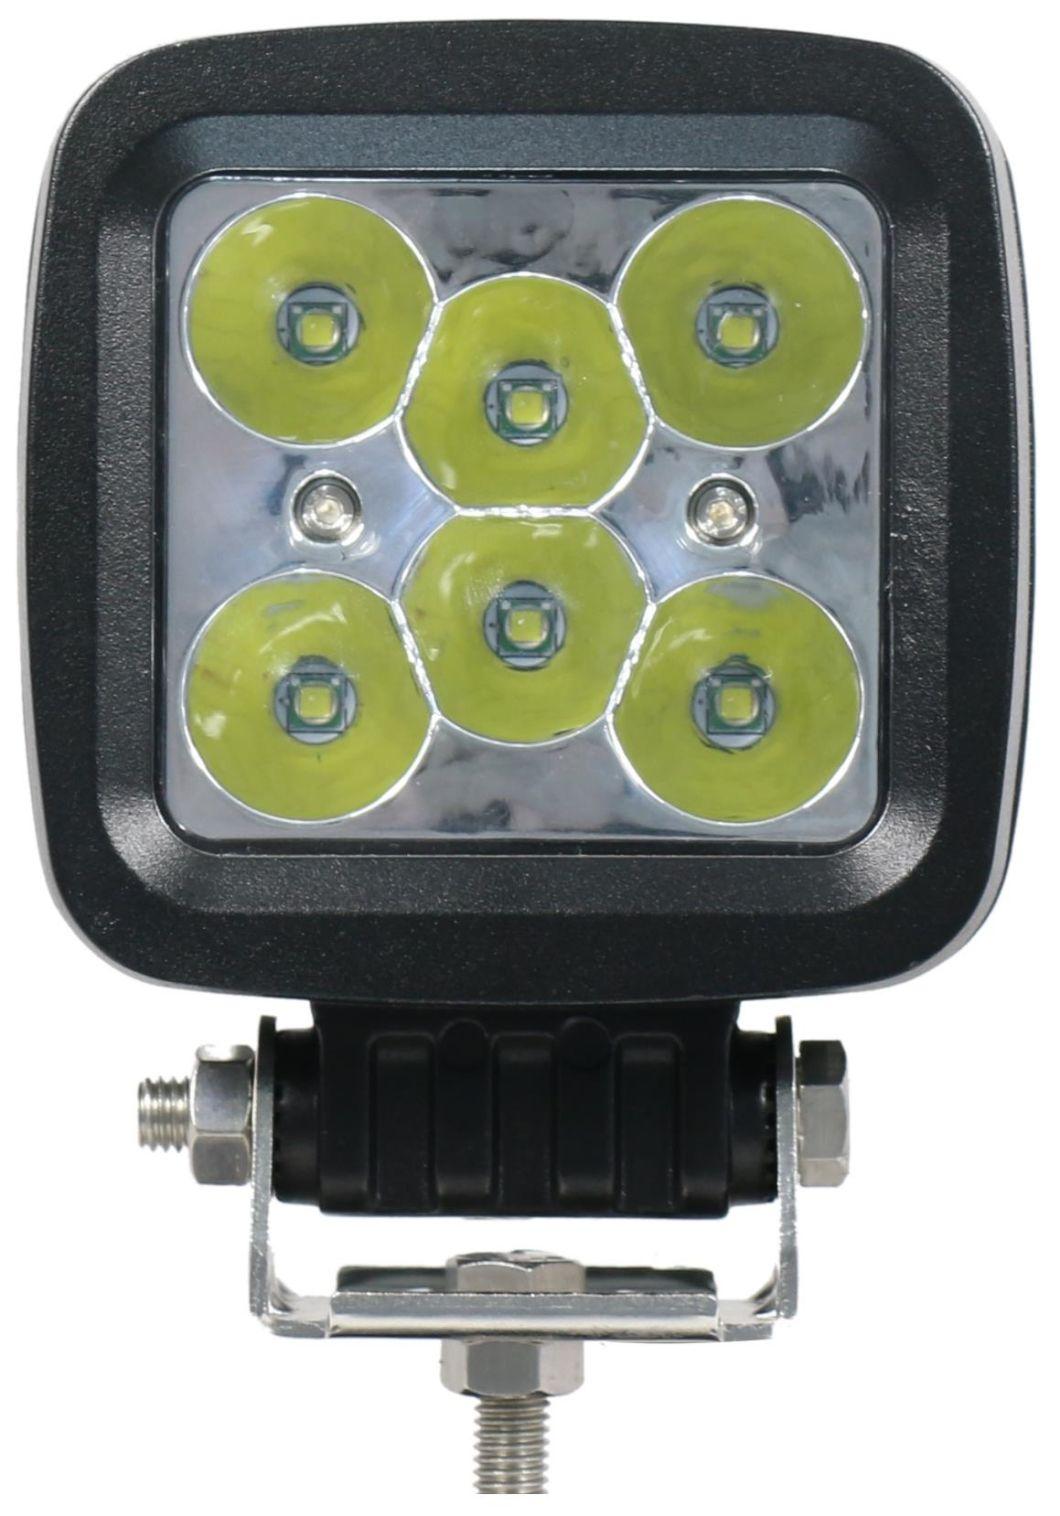 Lmusonu 2630 LED Work Lights for Car Auto Truck 4.0 Inch 30W 2500lm 10-30V High Quality